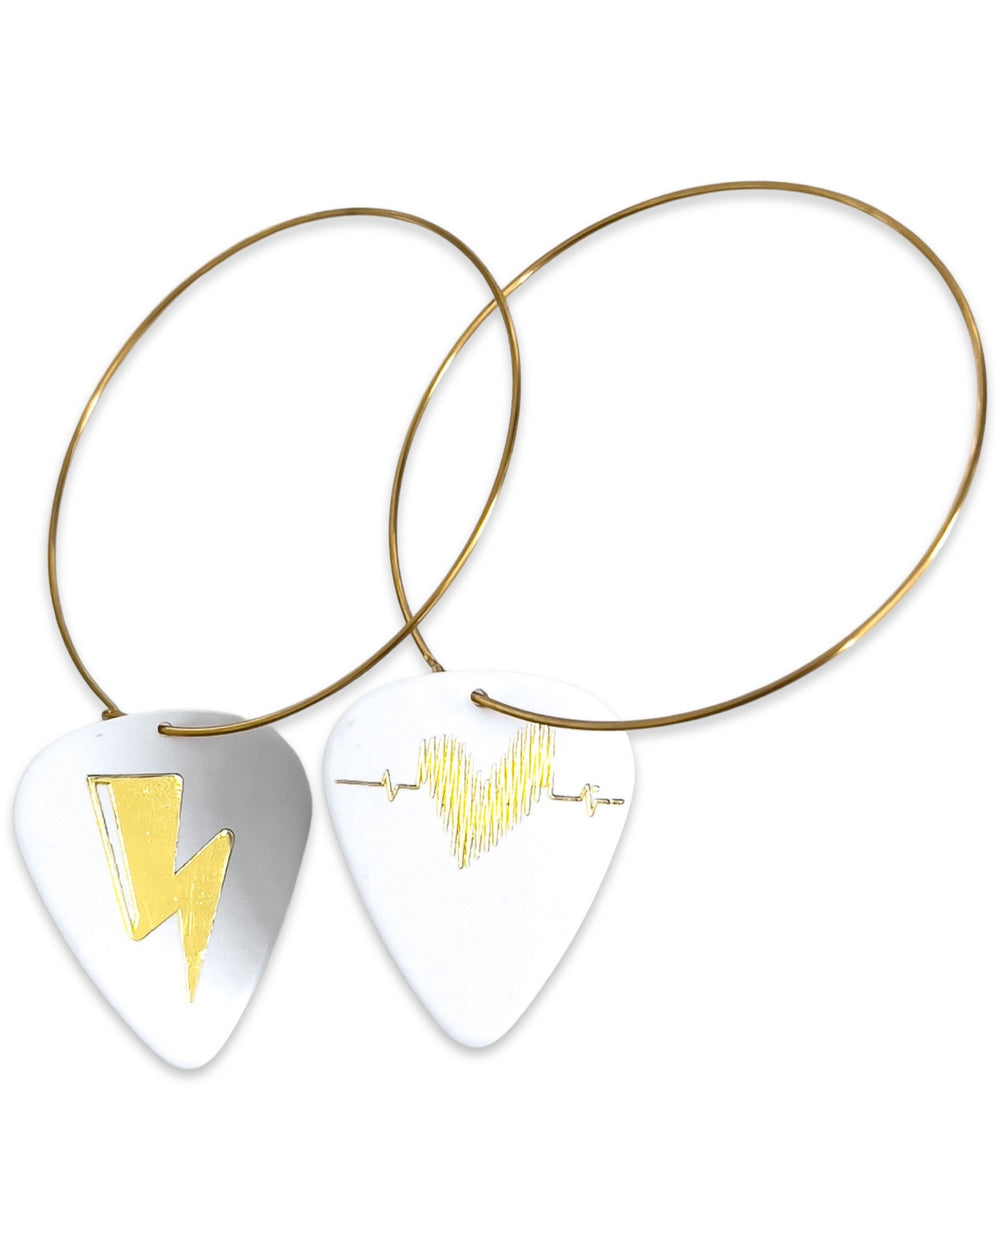 WS Electric Love White Gold Reversible Single Guitar Pick Earrings